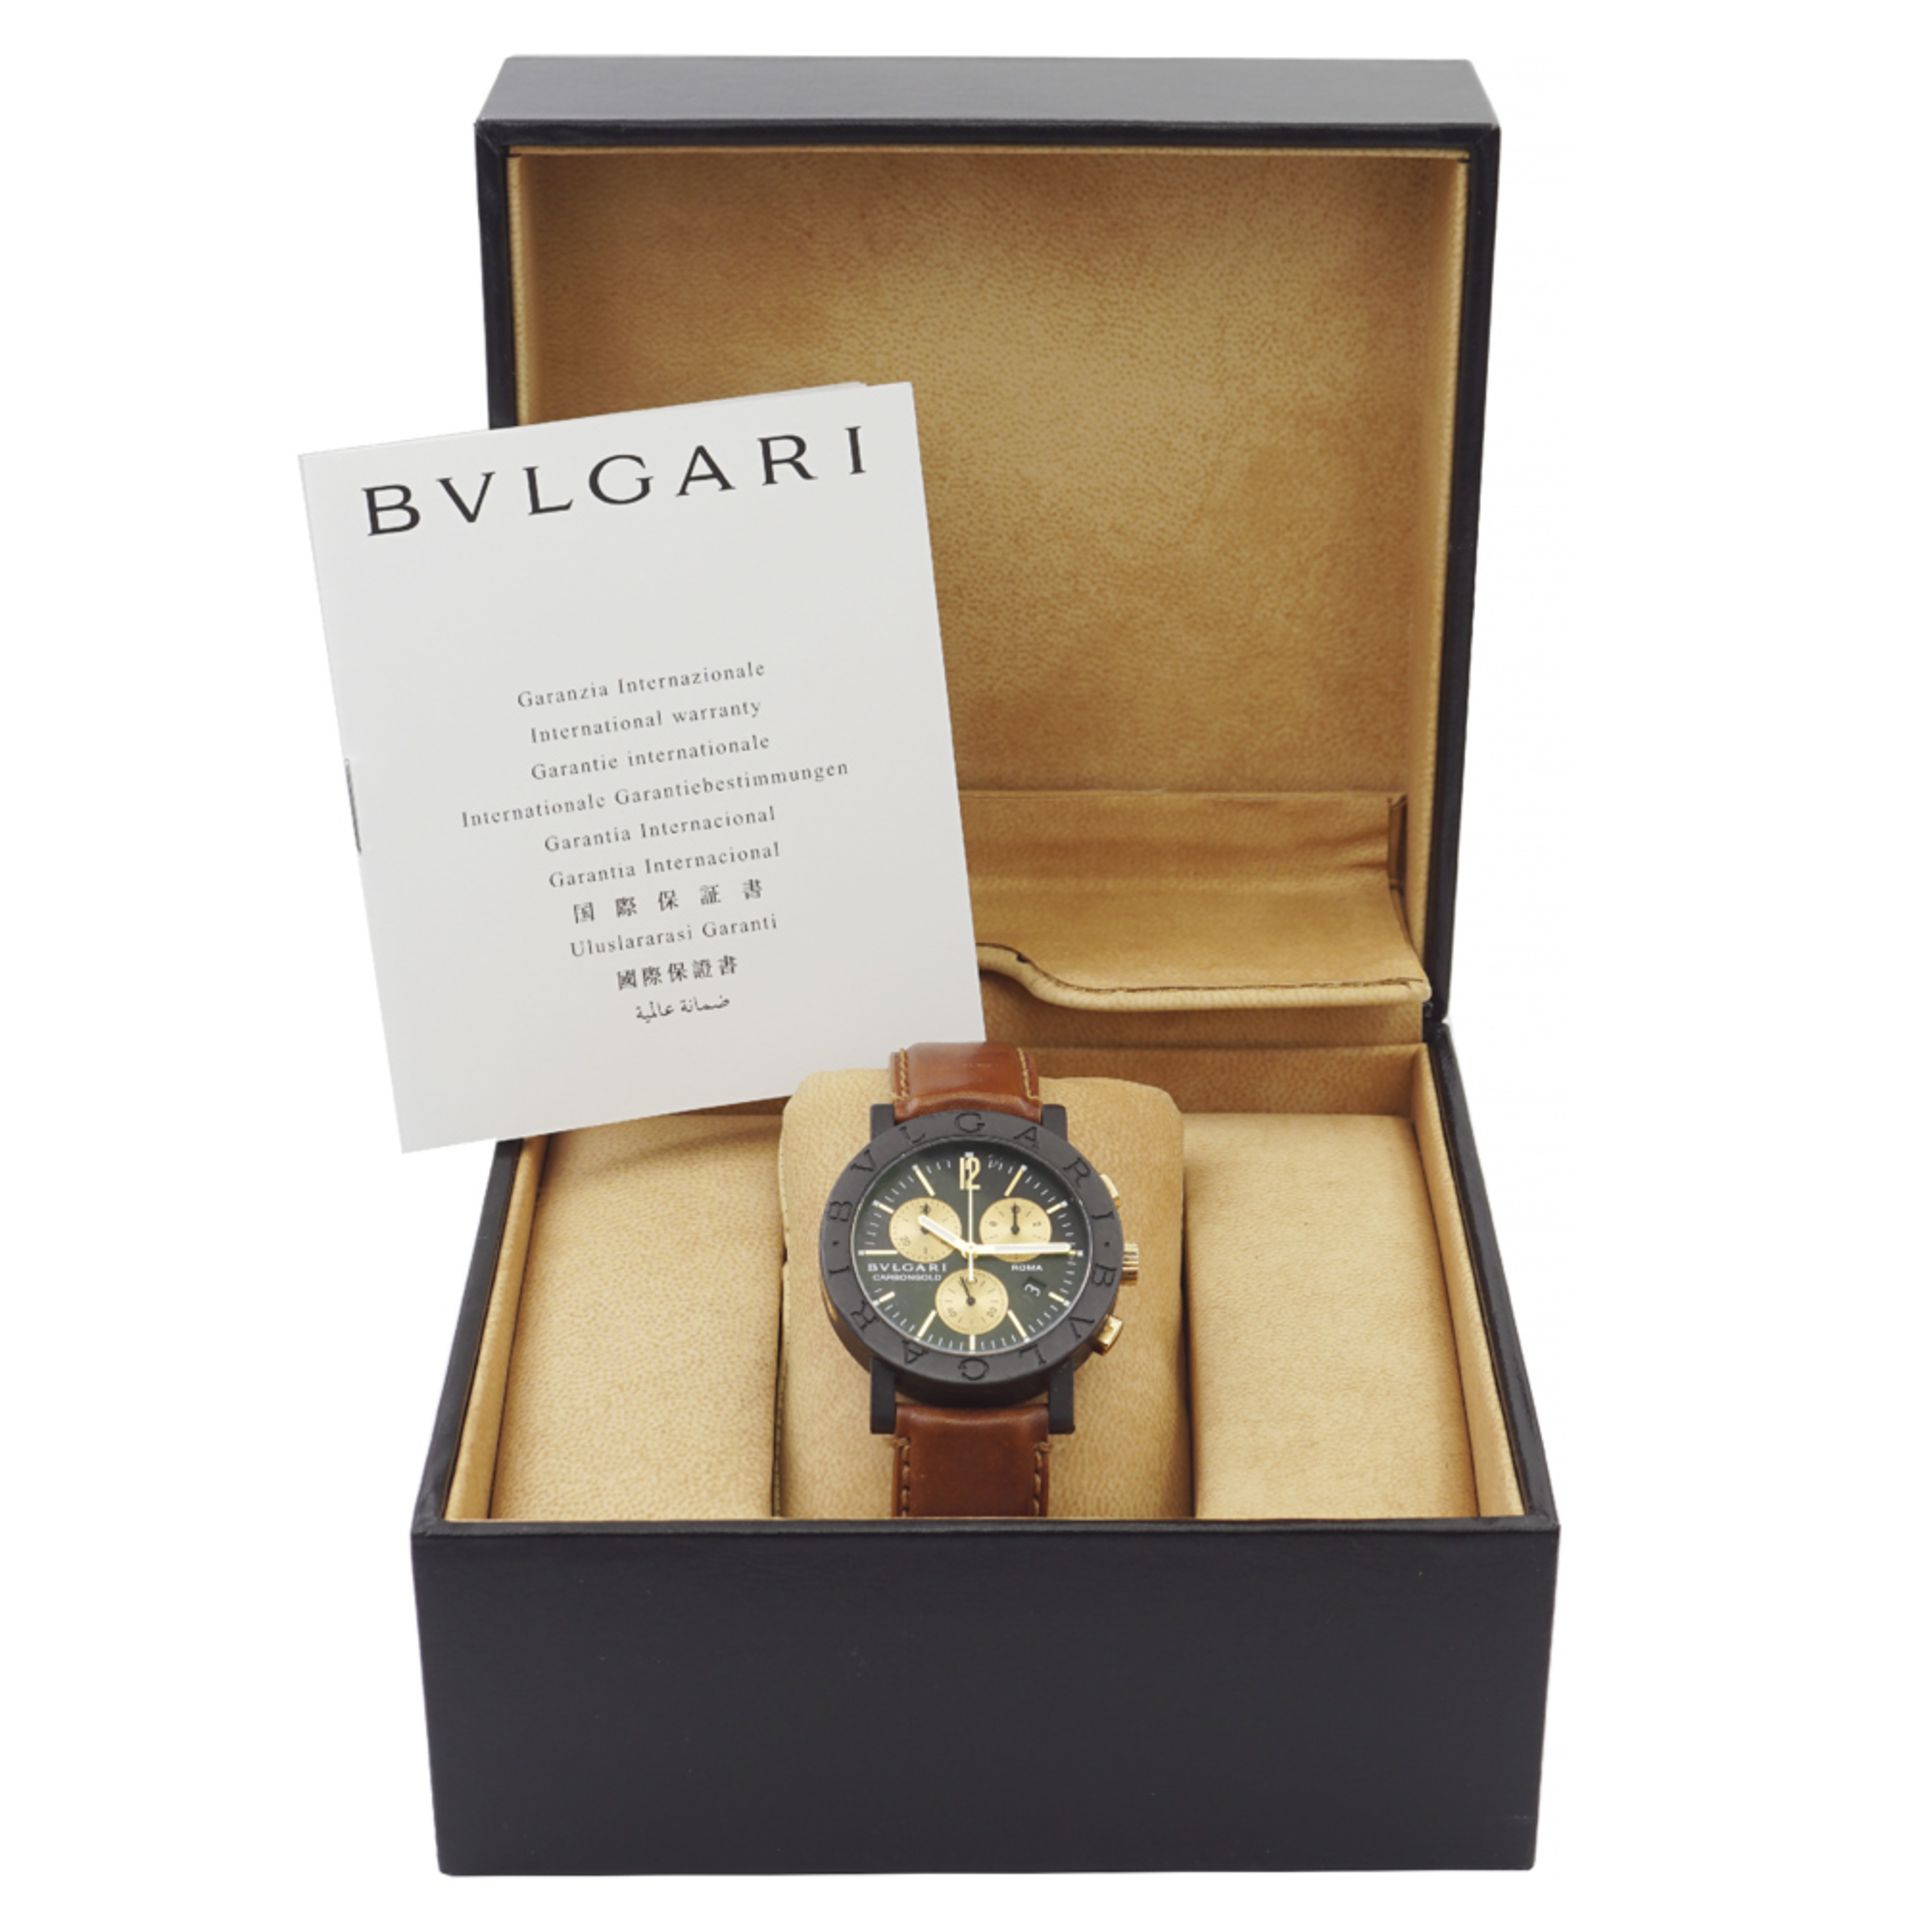 Bulgari Carbongold Roma, wrist chronograph 2000s - Image 3 of 3